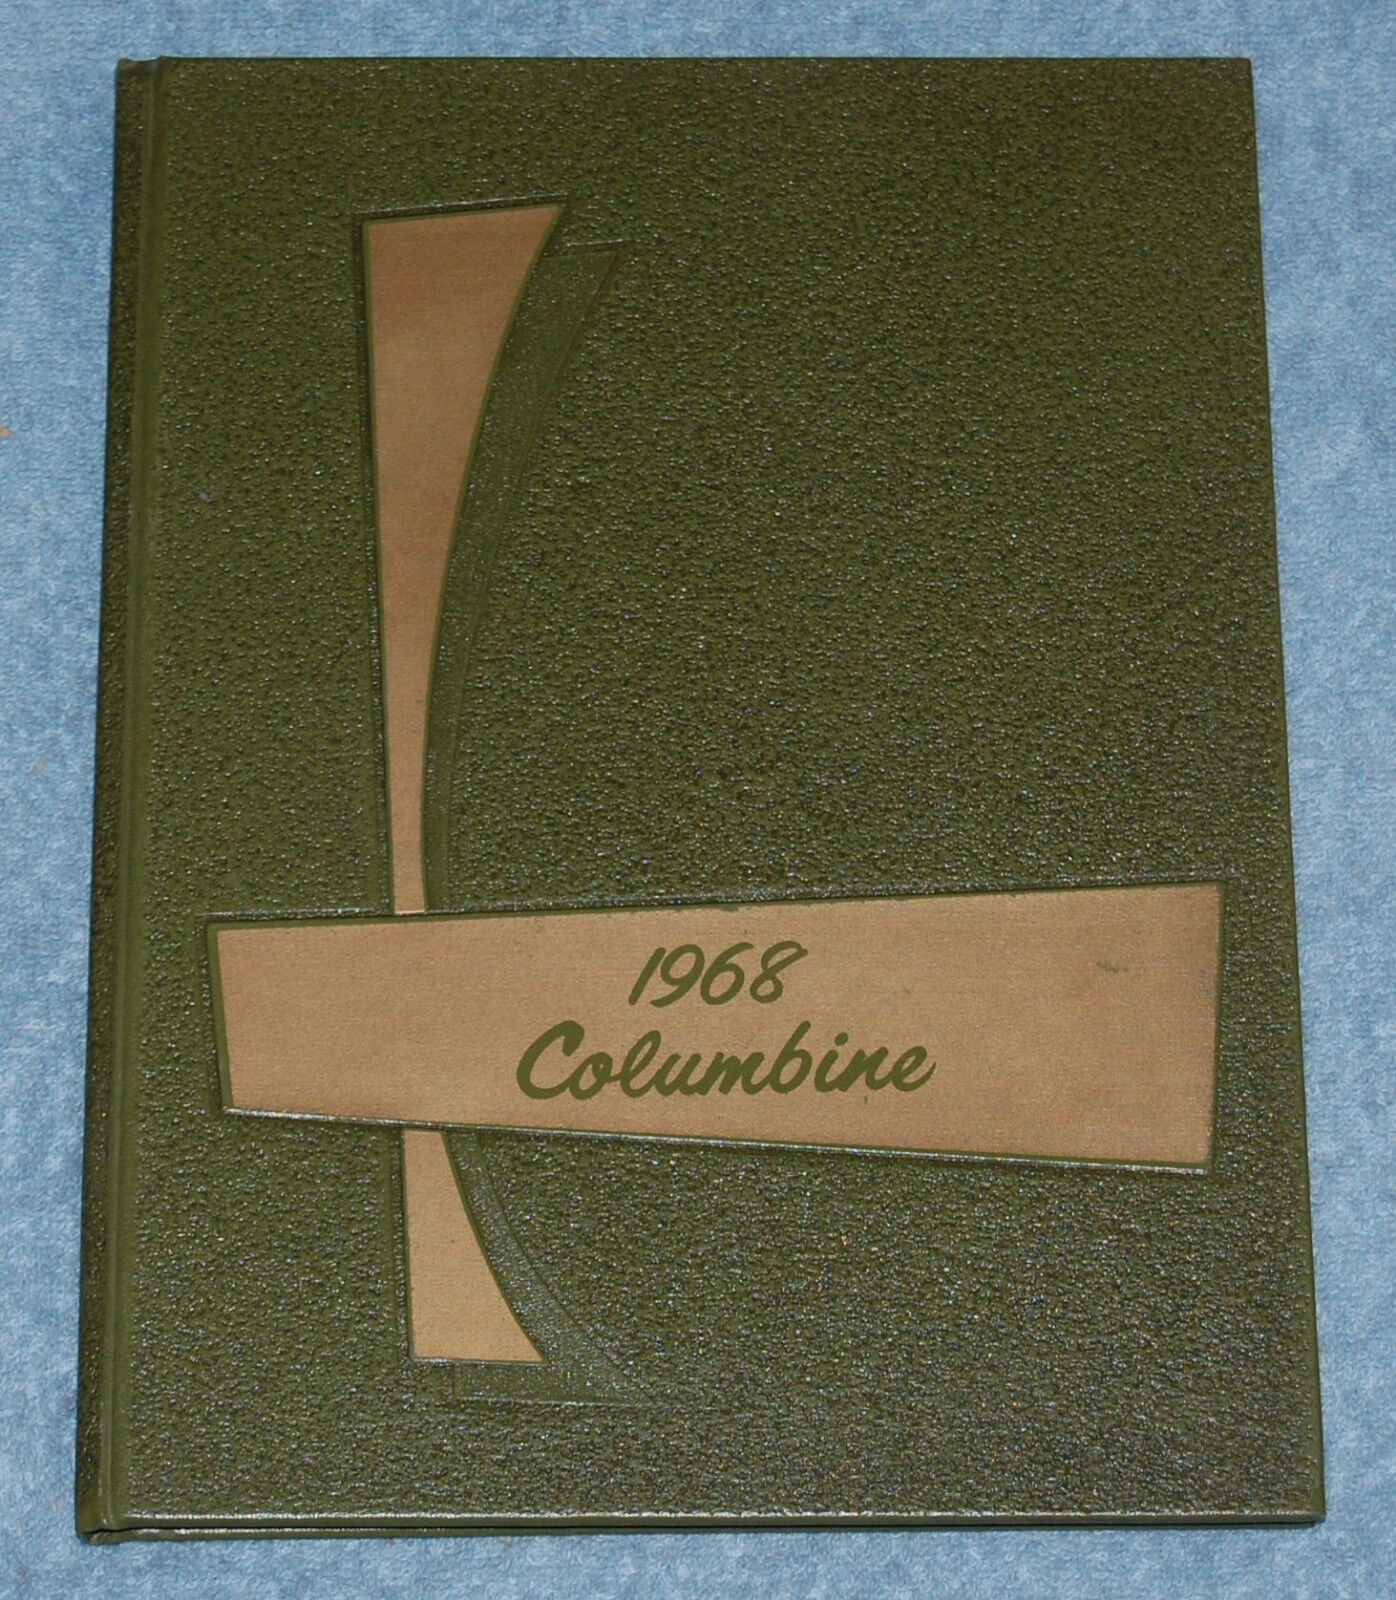 Mile High Academy 1968 Yearbook (Columbine), Denver Colorado